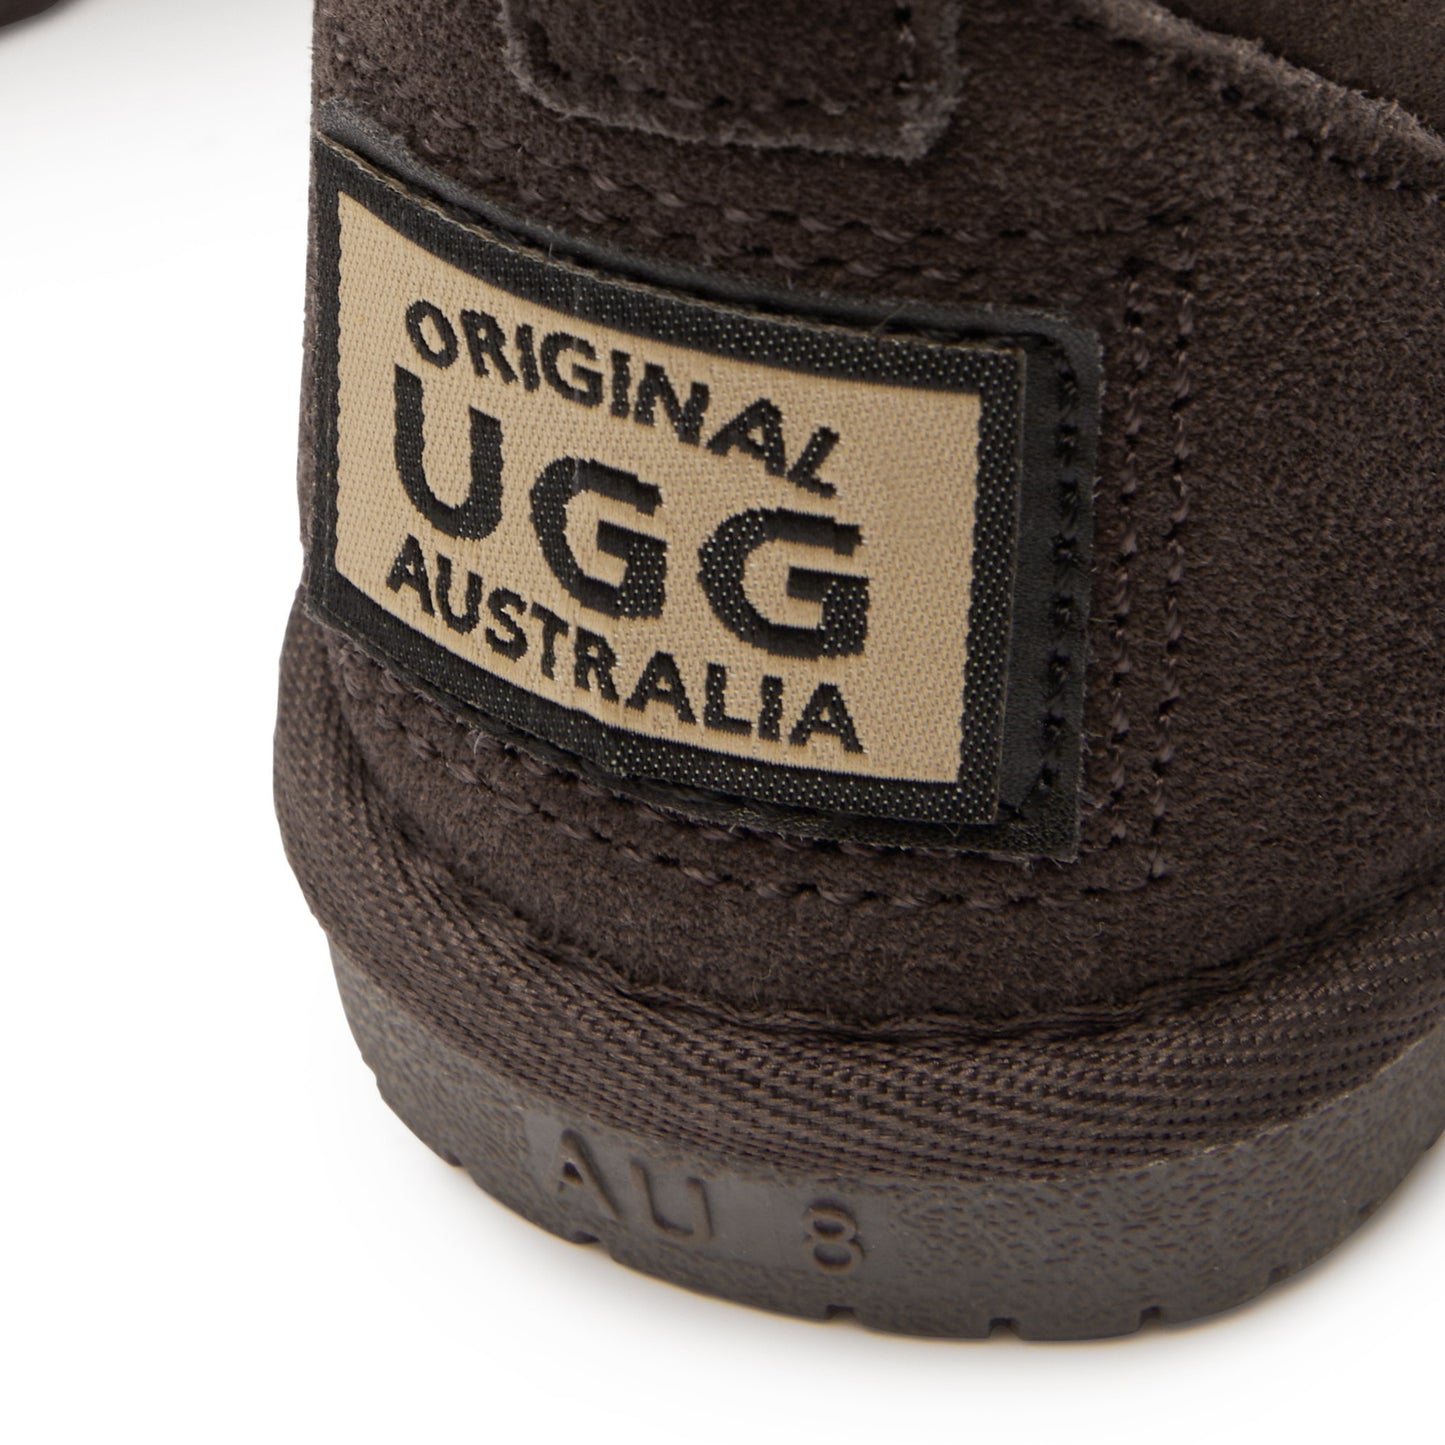 Originals Ugg Australia Long Button Boot Chocolate